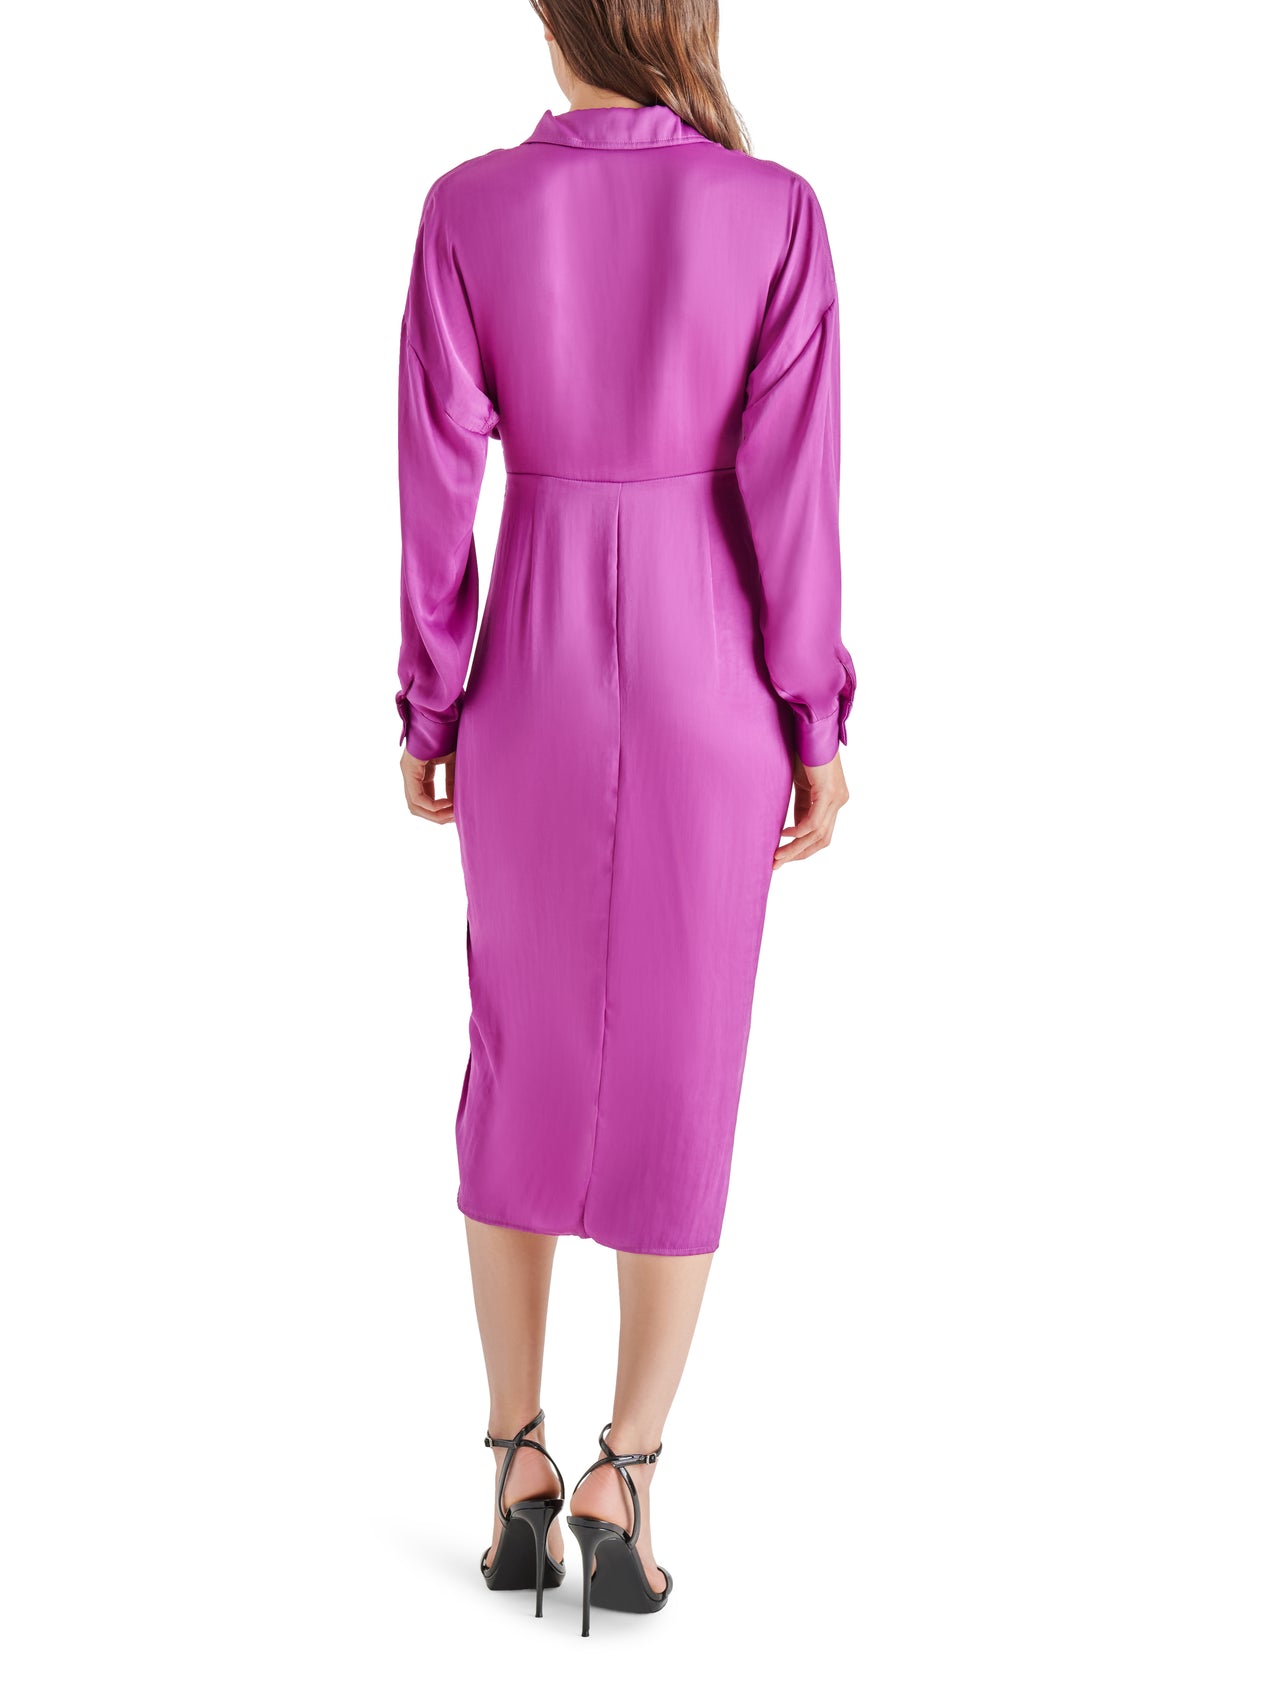 Sula Dress Magenta Purple,  by Steve Madden | LIT Boutique